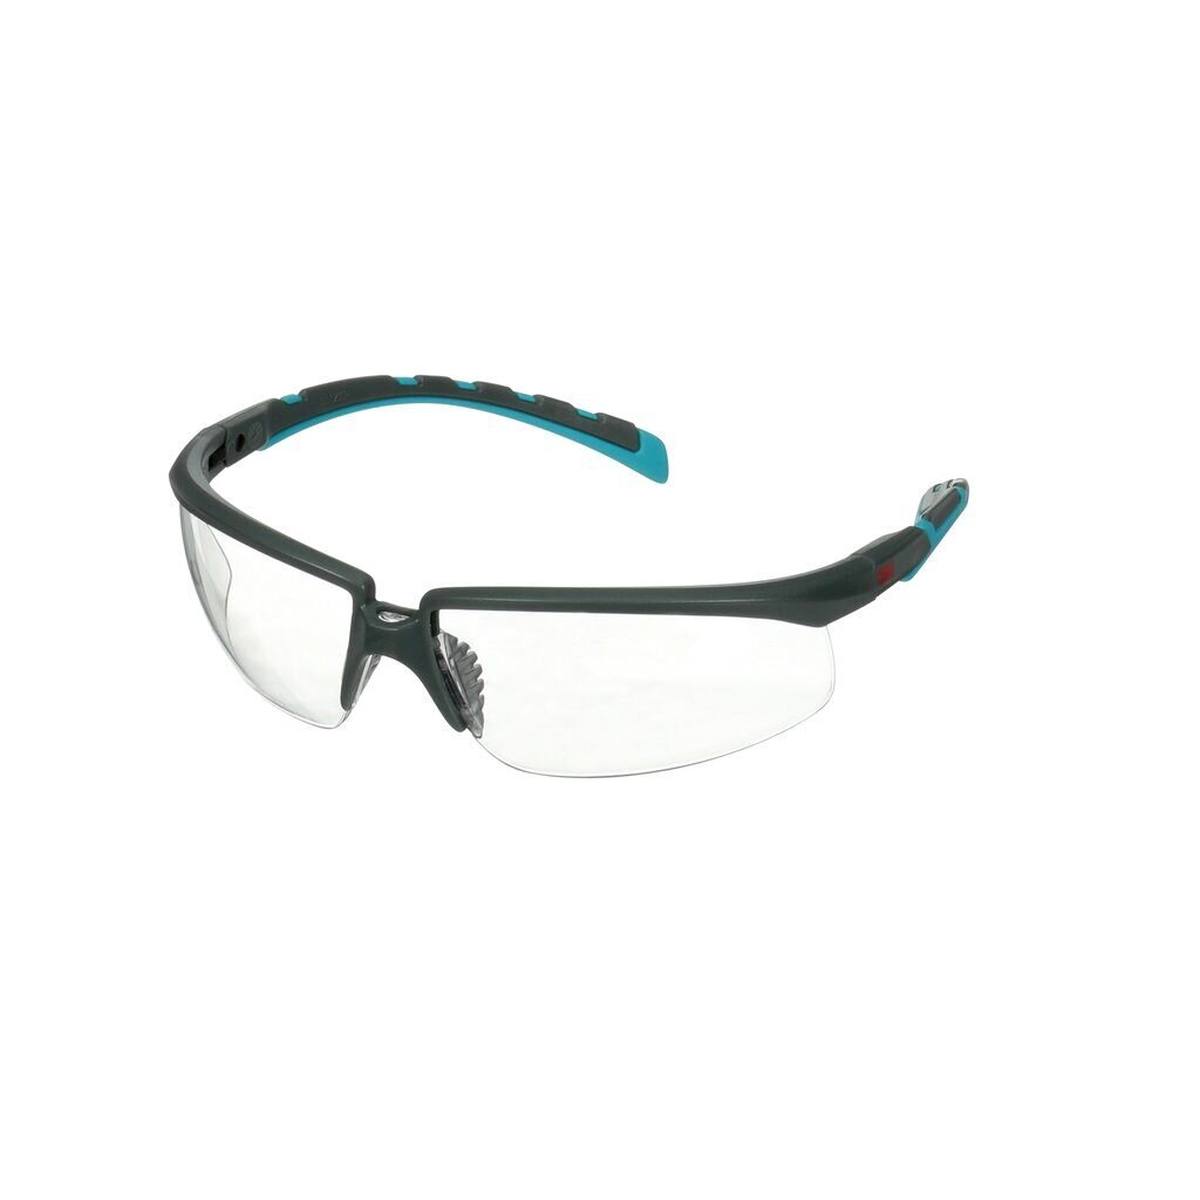 3M Occhiali di sicurezza Solus 2000, aste blu/grigio, antigraffio+ (K), lenti chiare, regolazione angolare, S2001ASP-BLU-EU